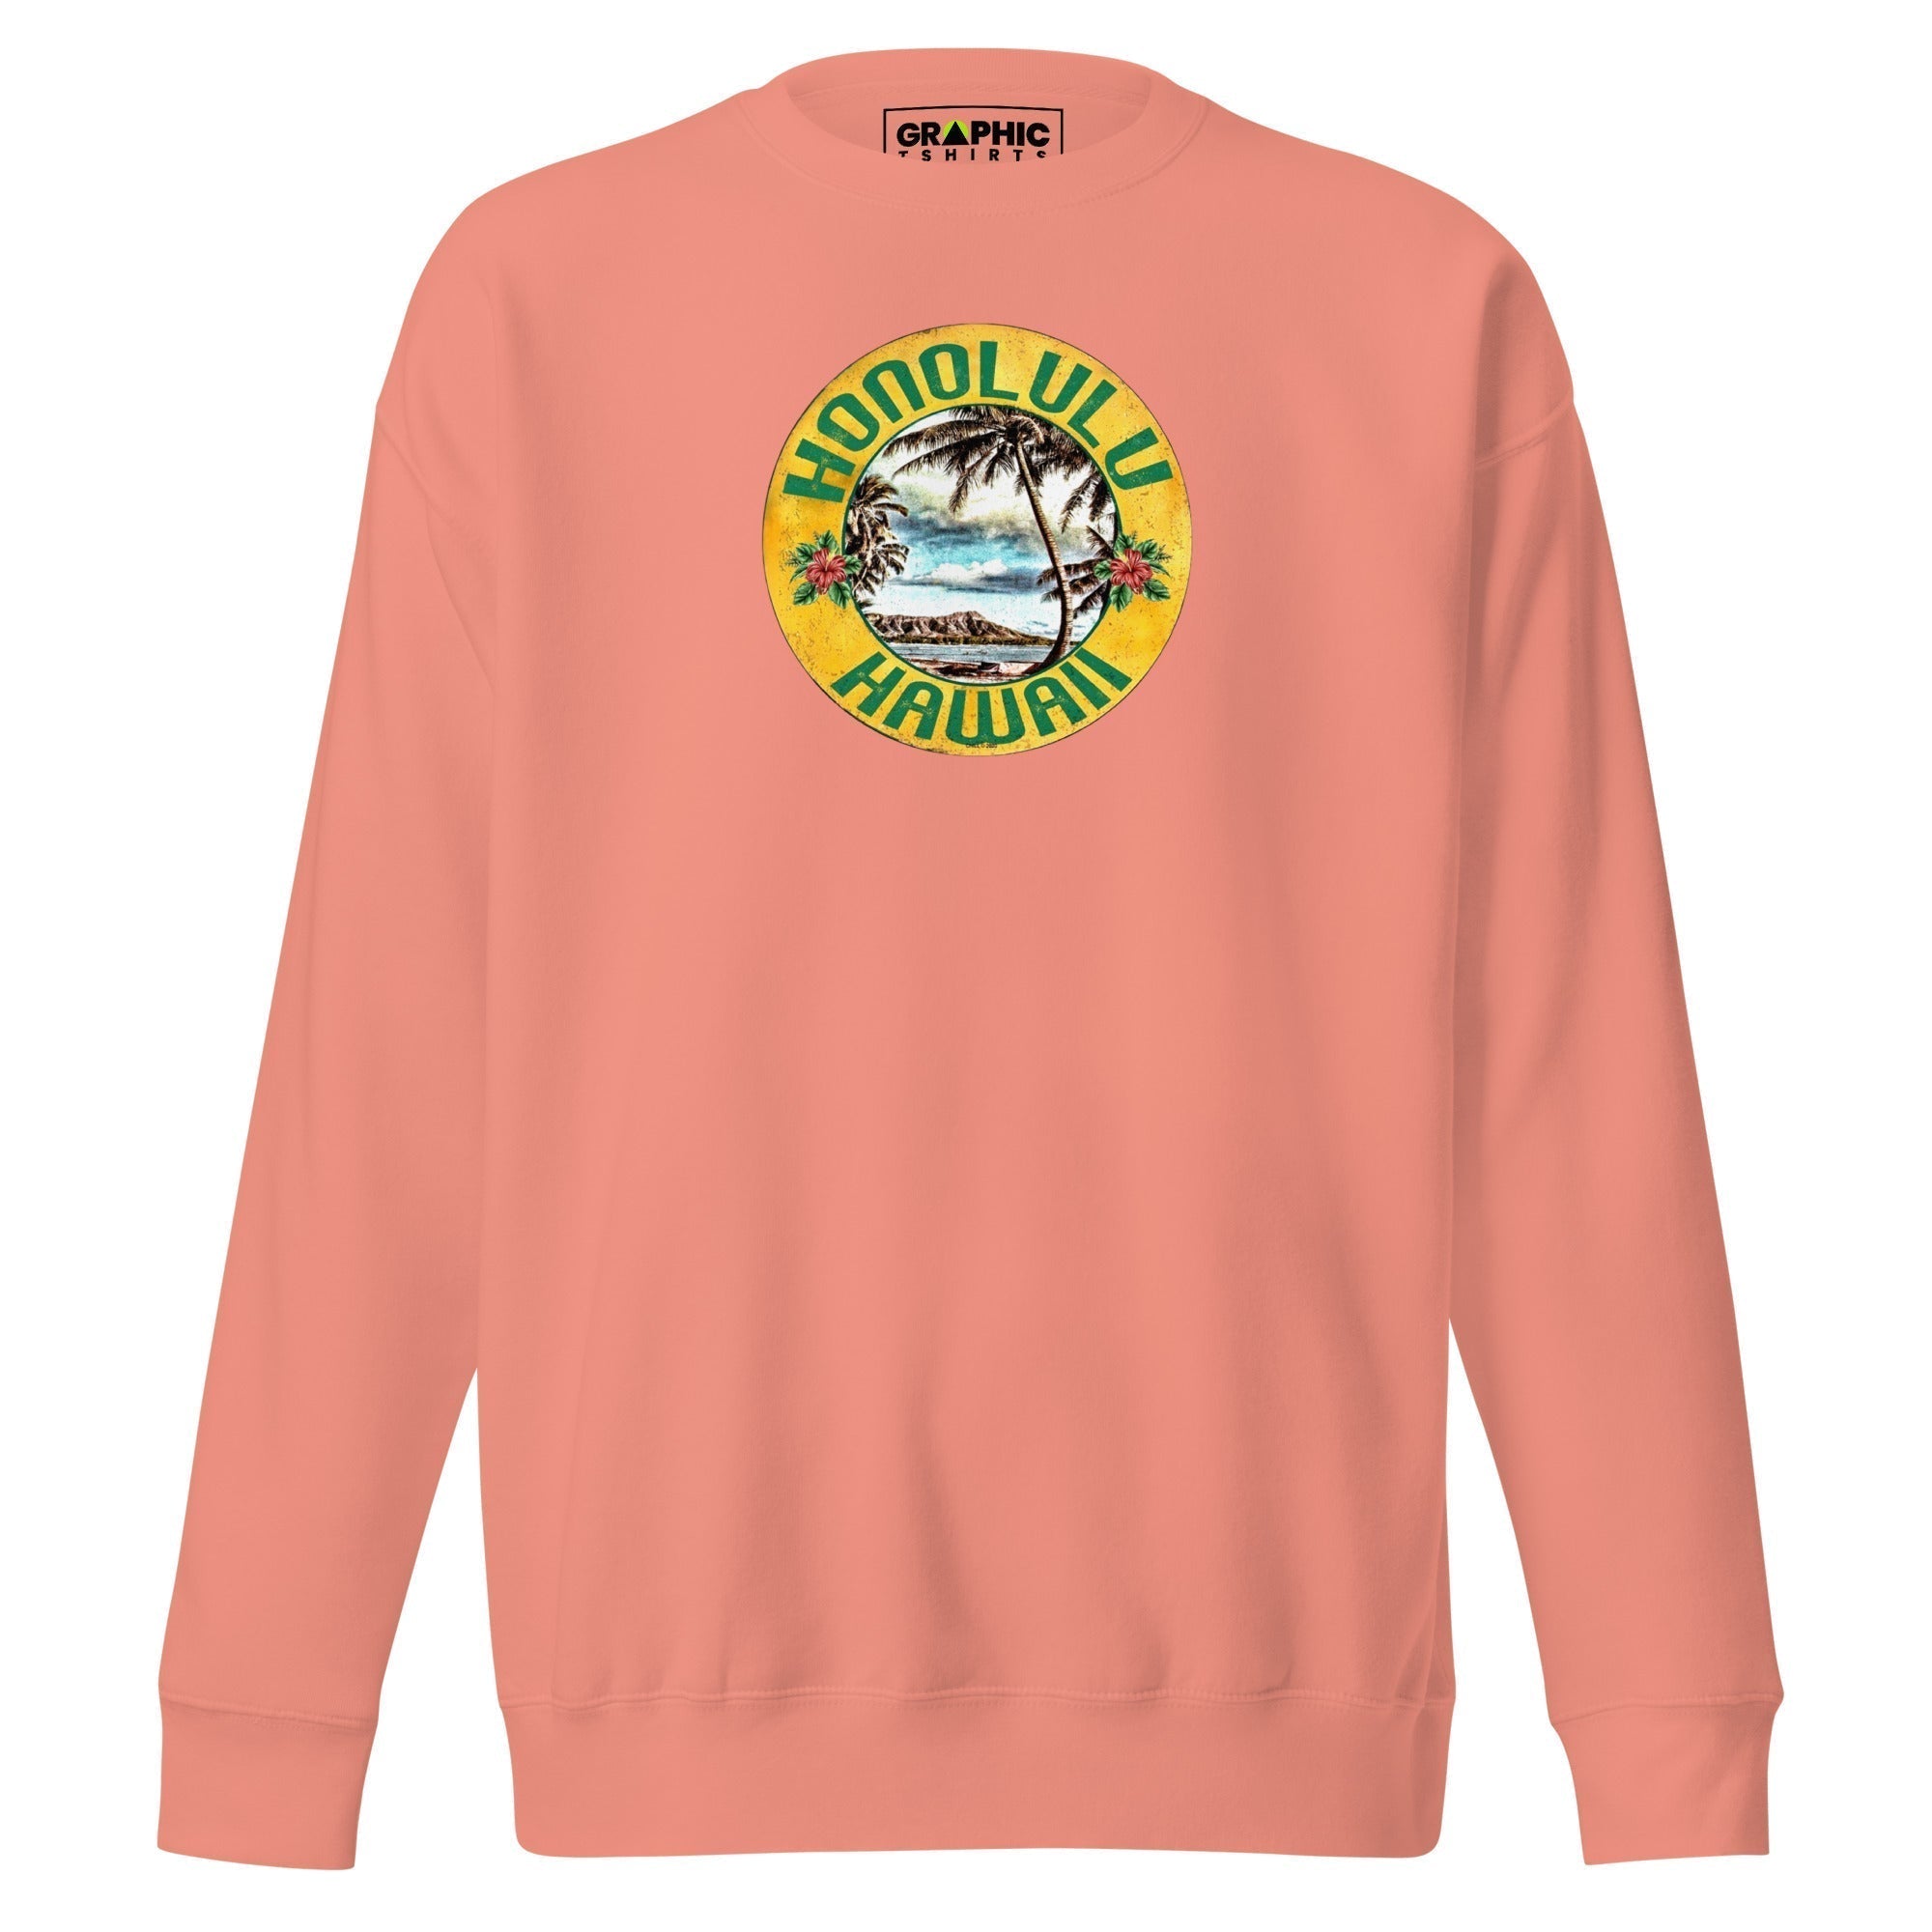 Unisex Premium Sweatshirt - Honolulu Hawaii Vintage - GRAPHIC T-SHIRTS